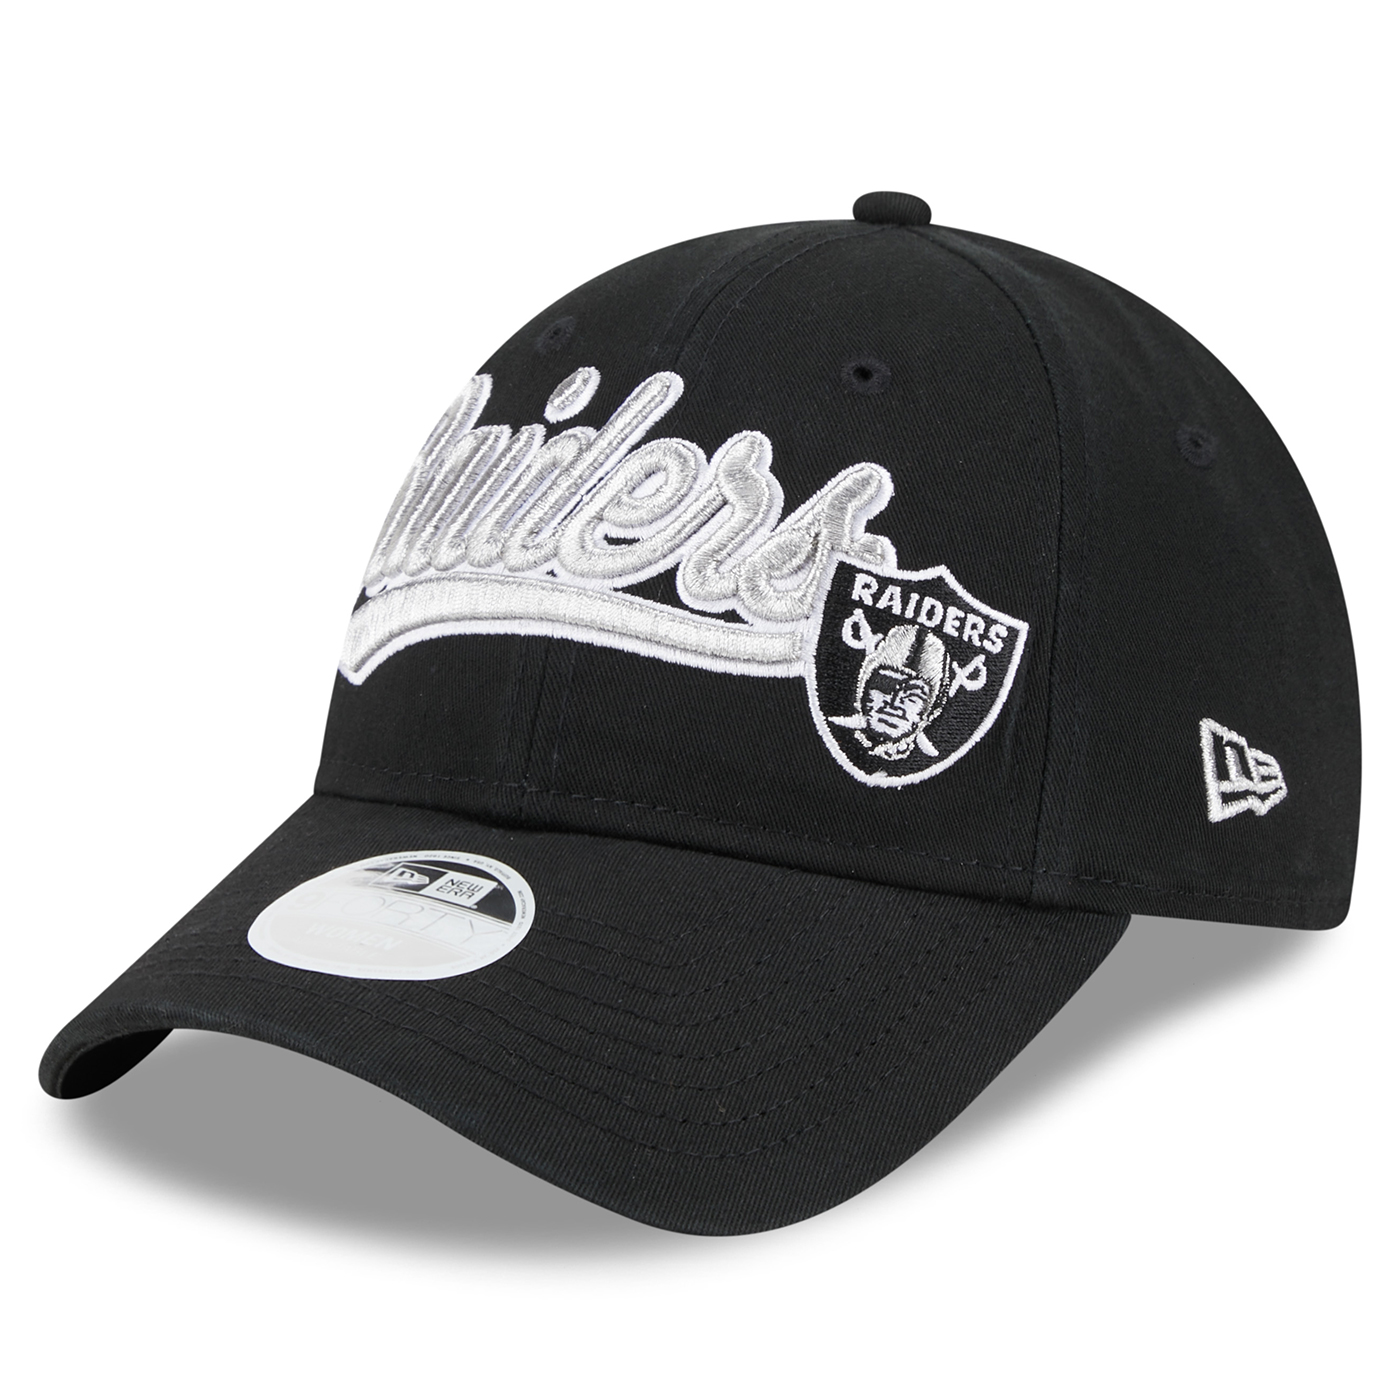 Las Vegas Raiders Women's Cheer 9FORTY Adjustable Hat